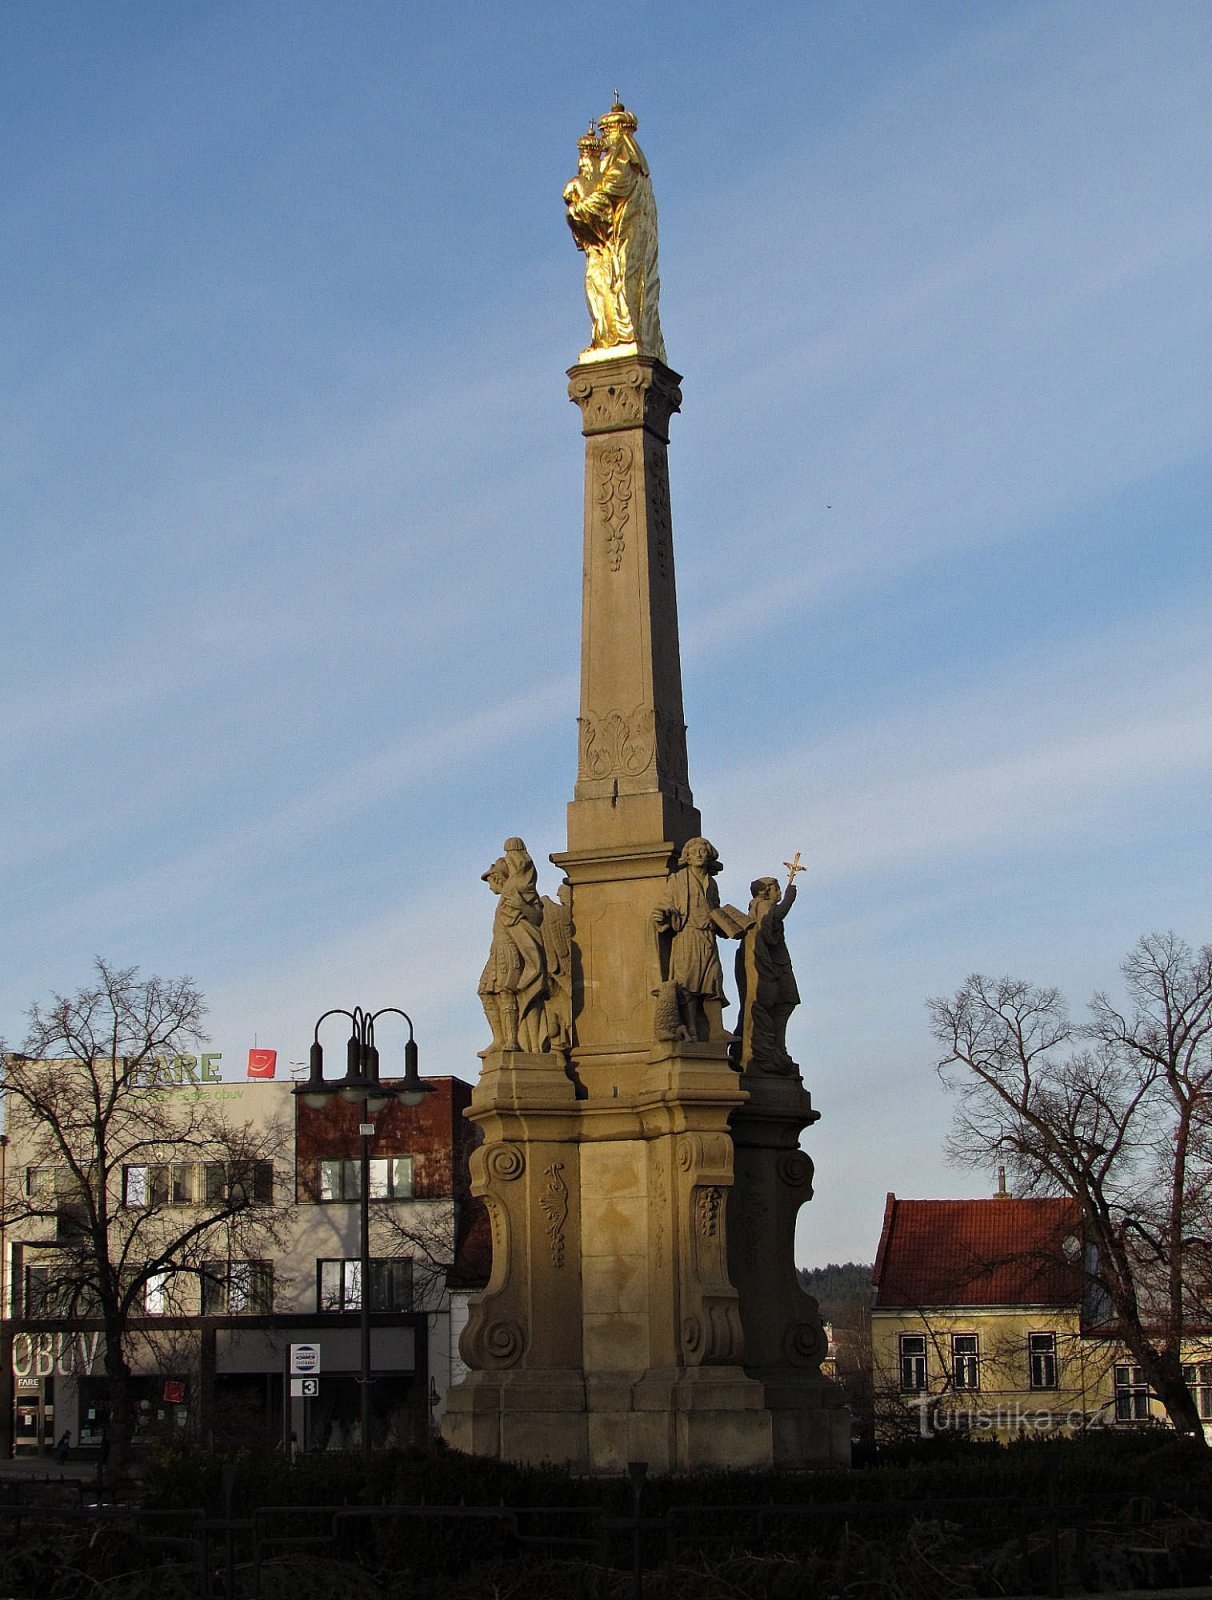 Valašskoklobucký Marian column